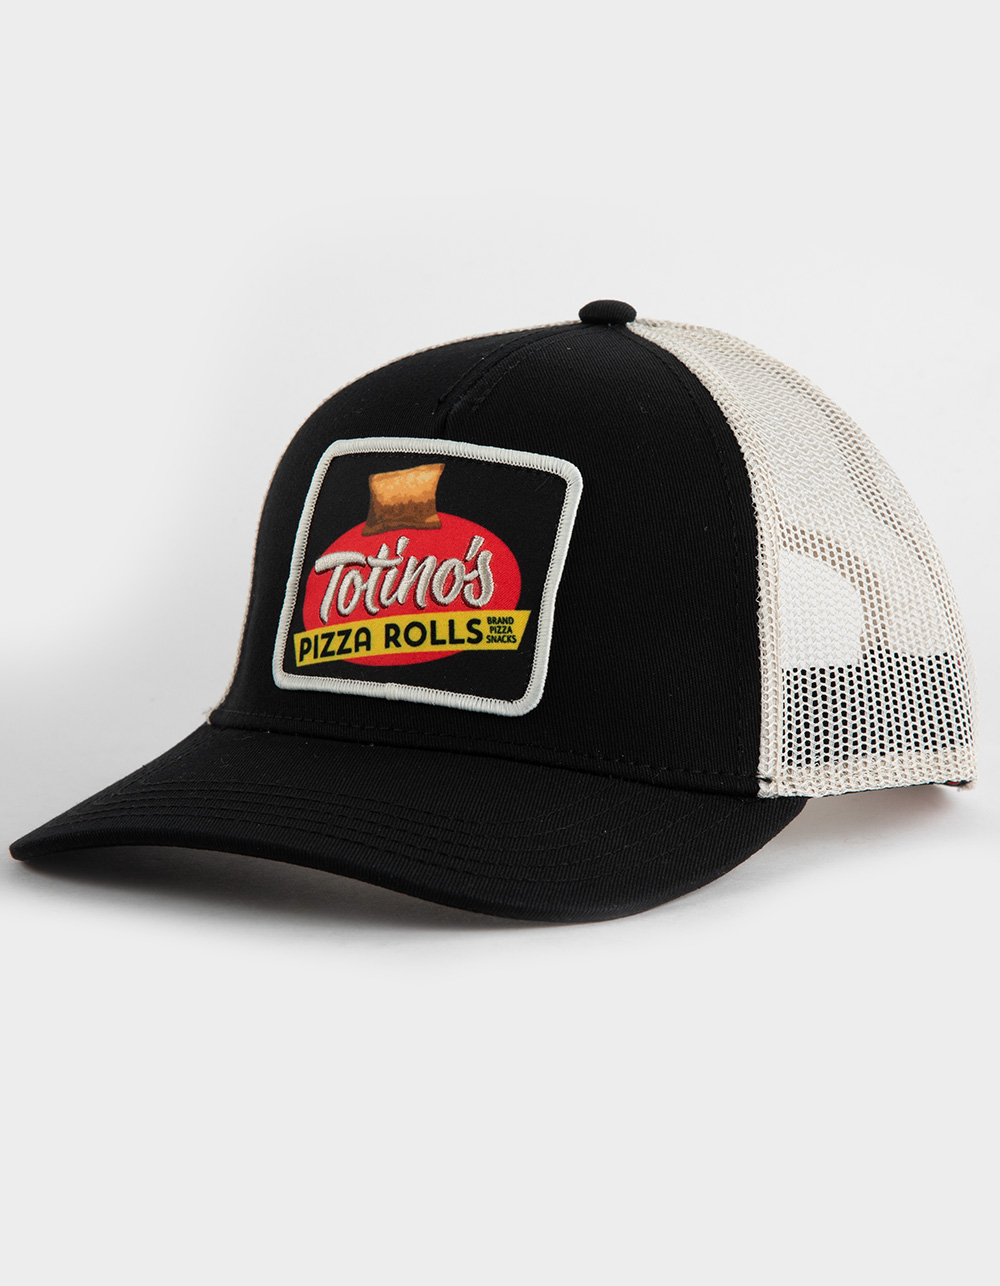 AMERICAN NEEDLE Totino's Pizza Rolls Trucker Hat